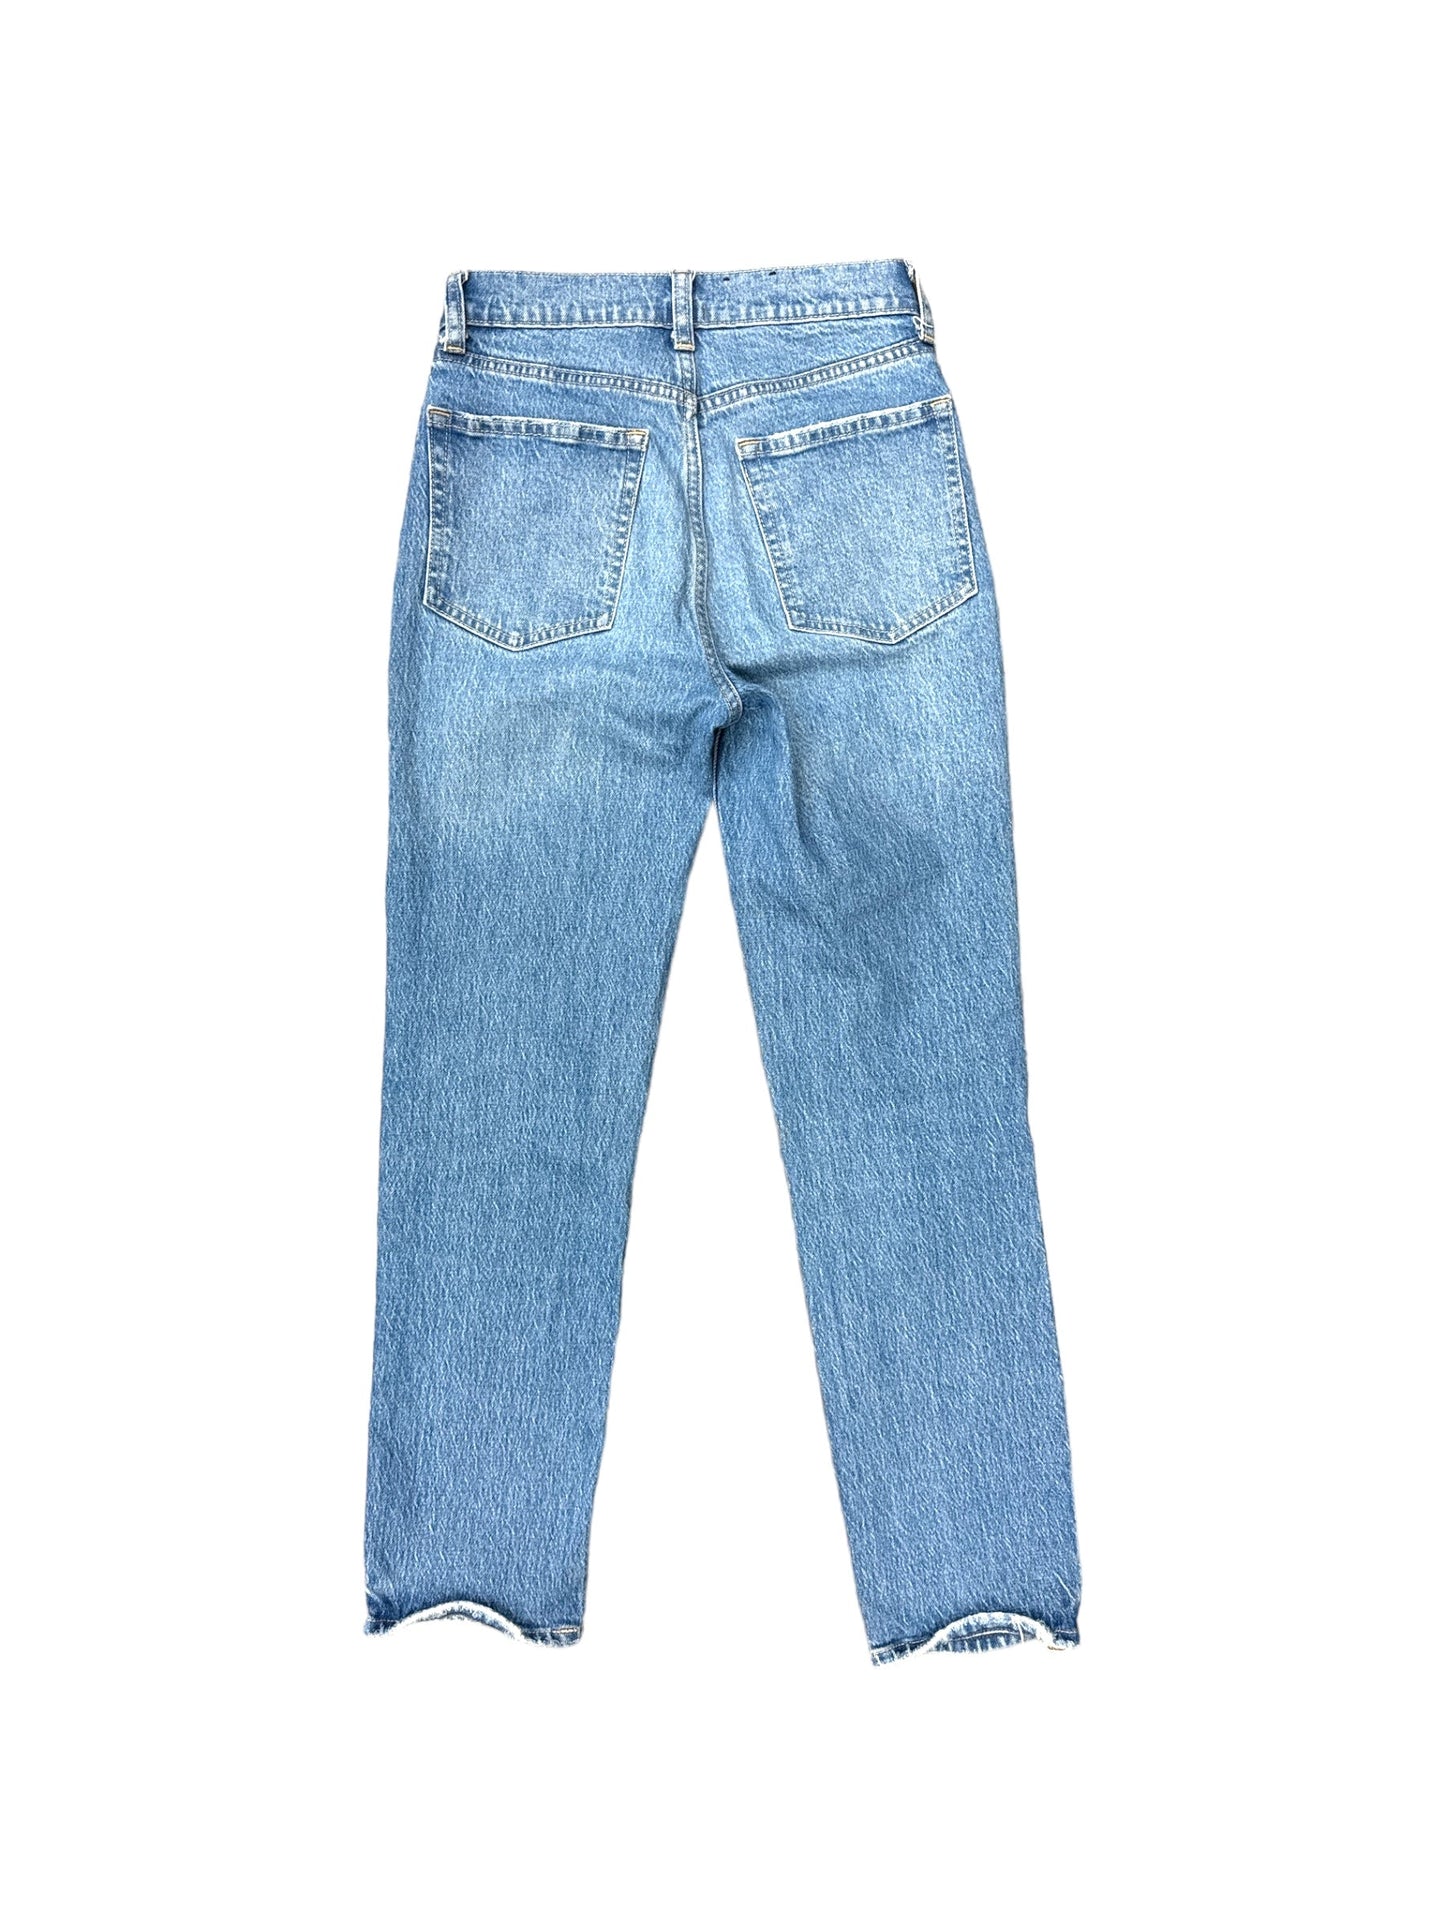 Blue Denim Jeans Skinny Gap, Size 00